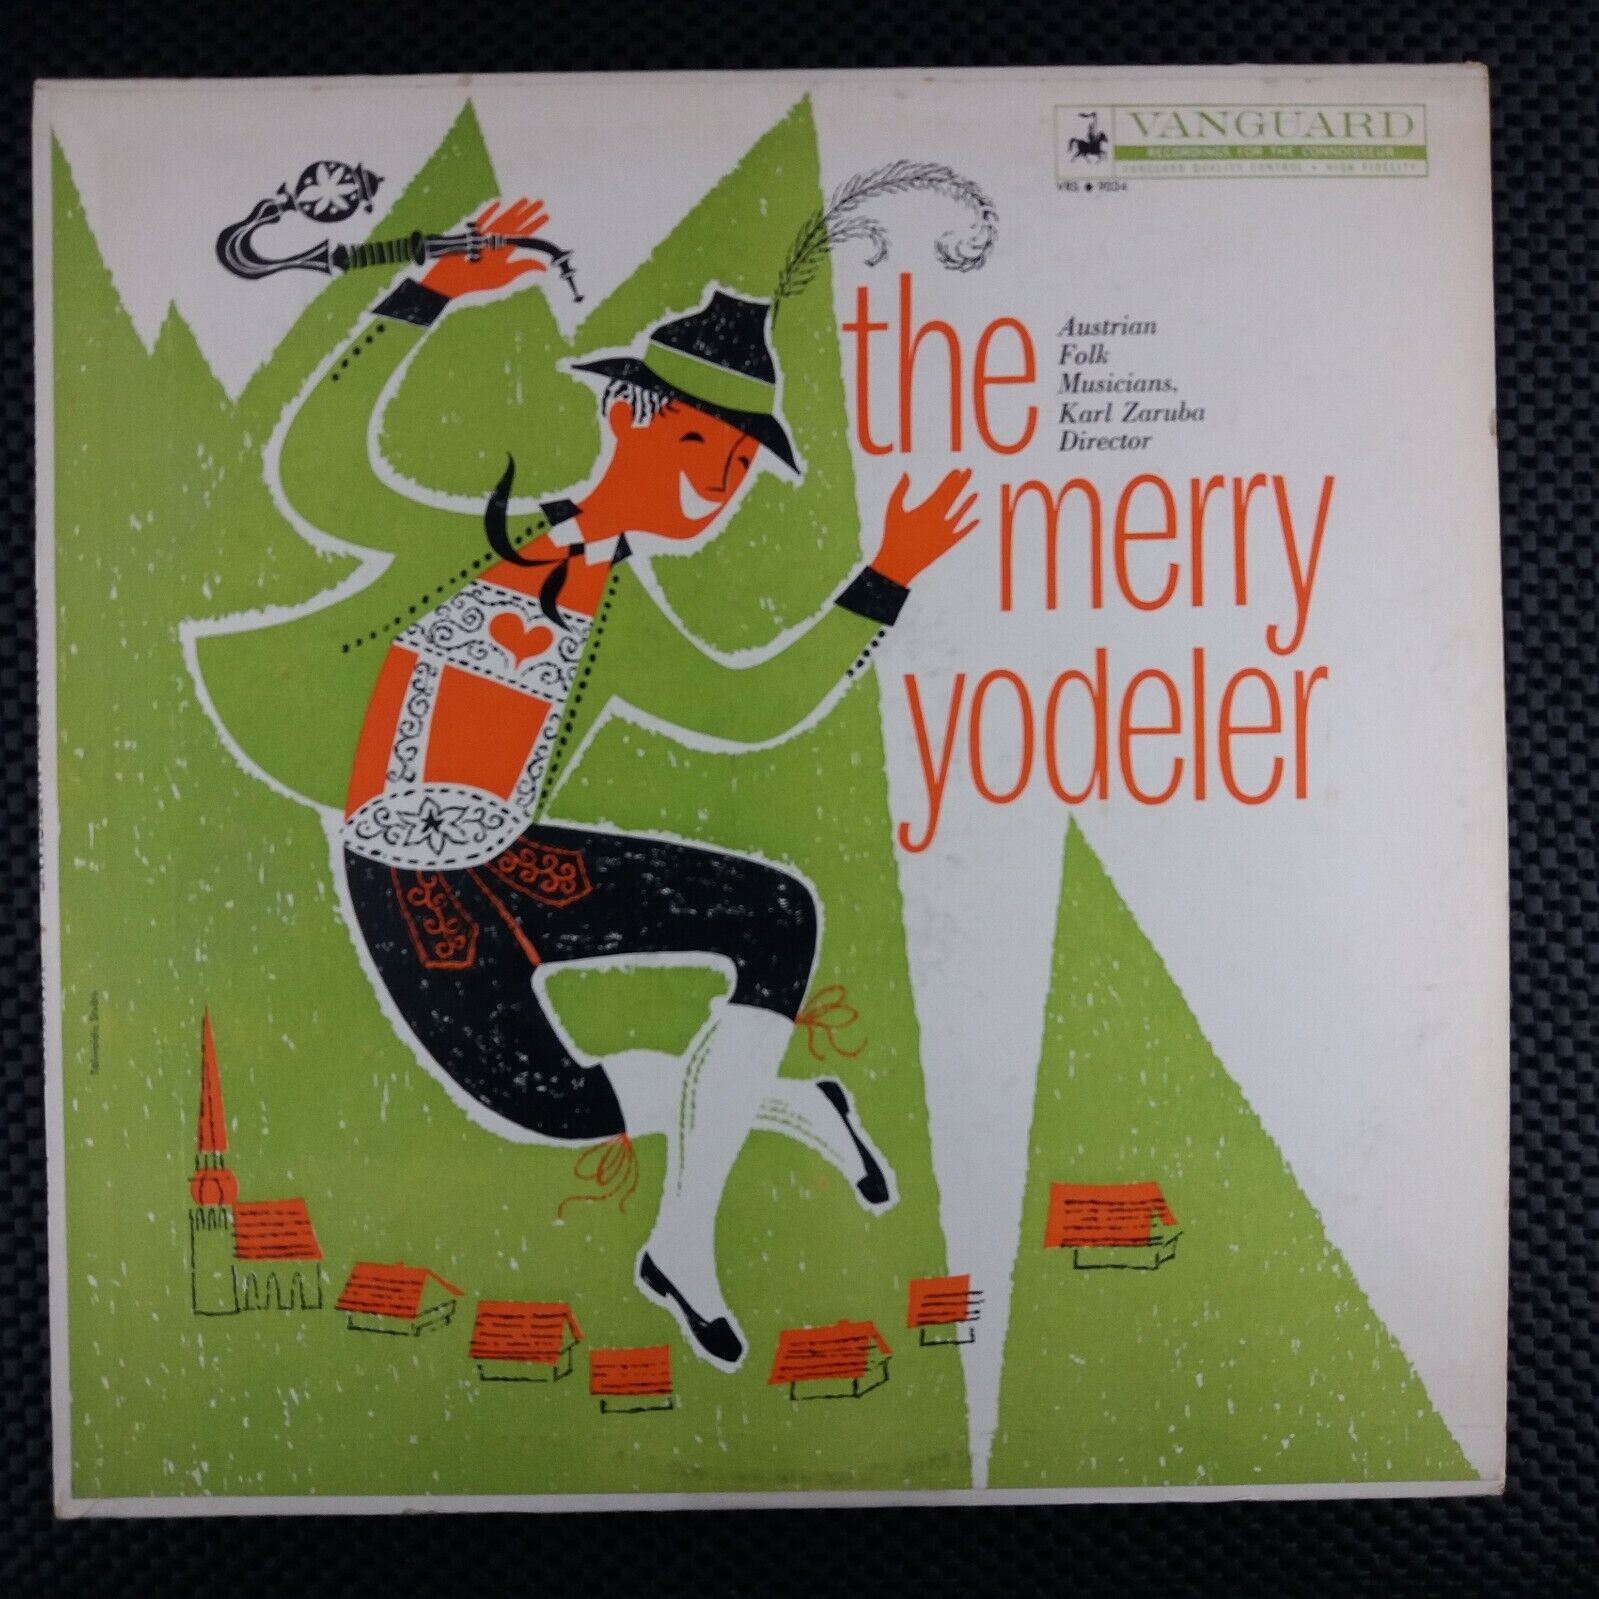 Austrian Folk Musicians – The Merry Yodeler (Vanguard Records – VRS-9034)